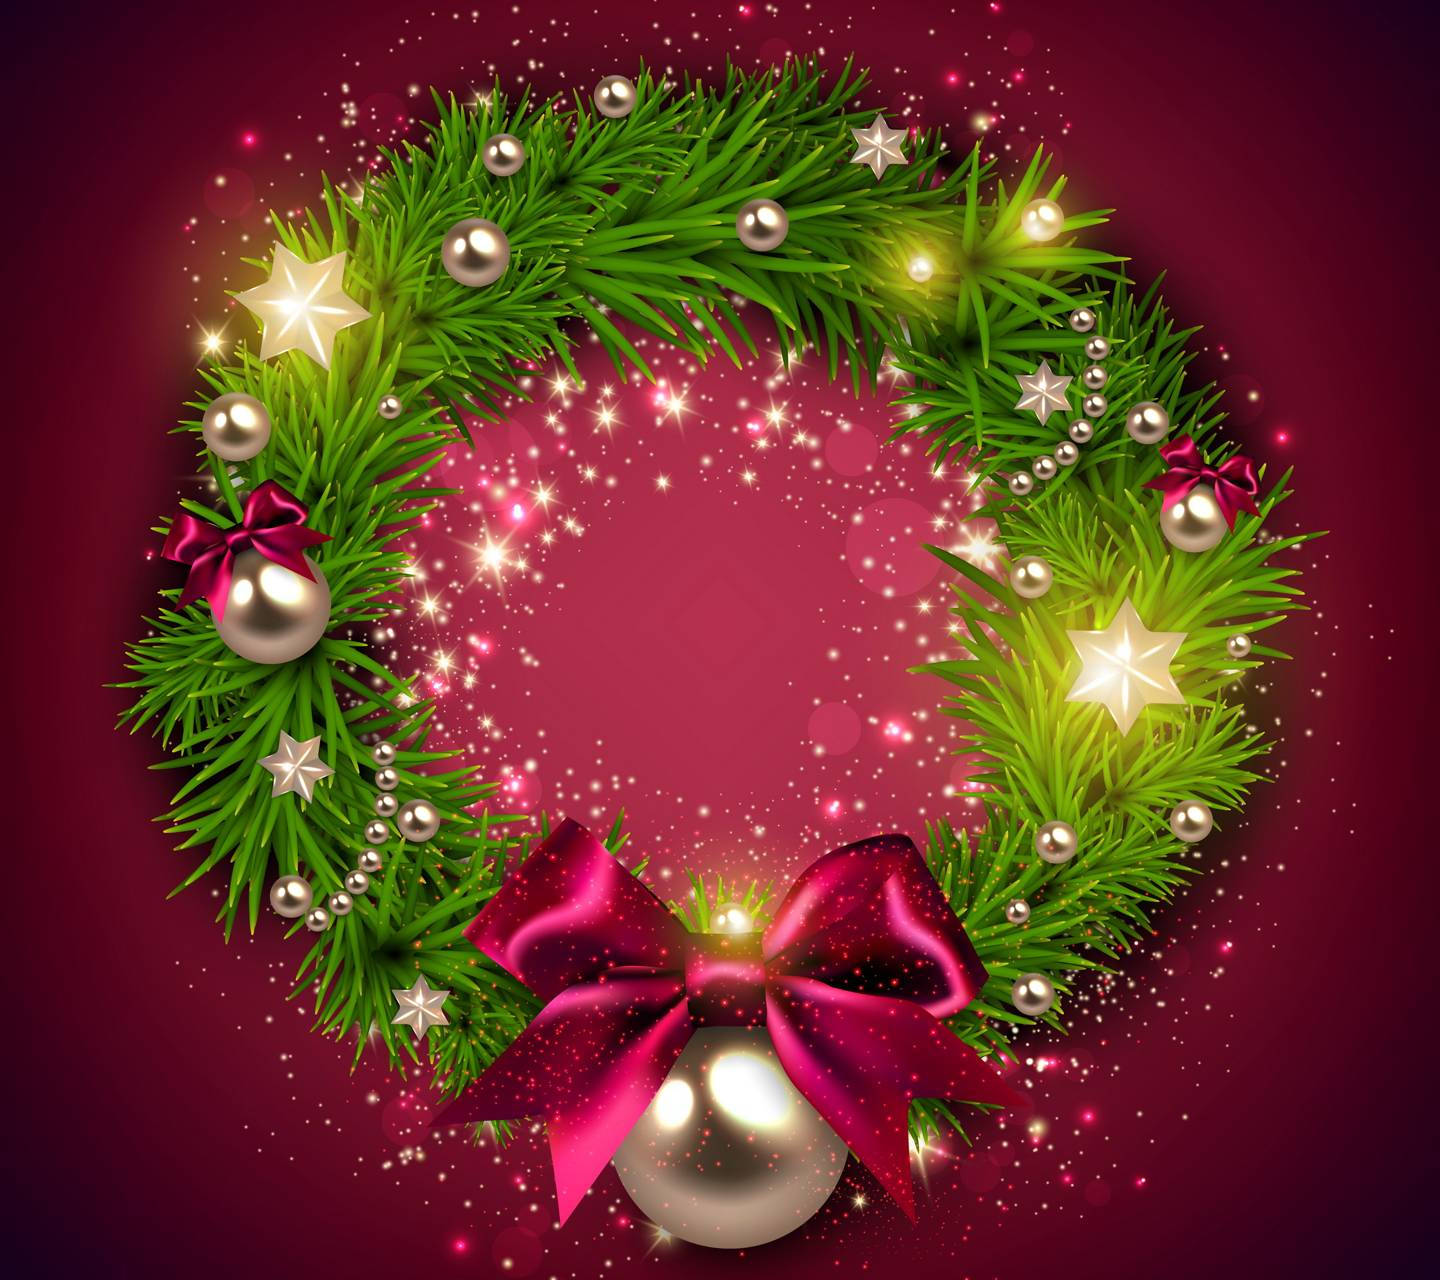 Caption: Glorious Christmas Wreath With Purple Ribbon